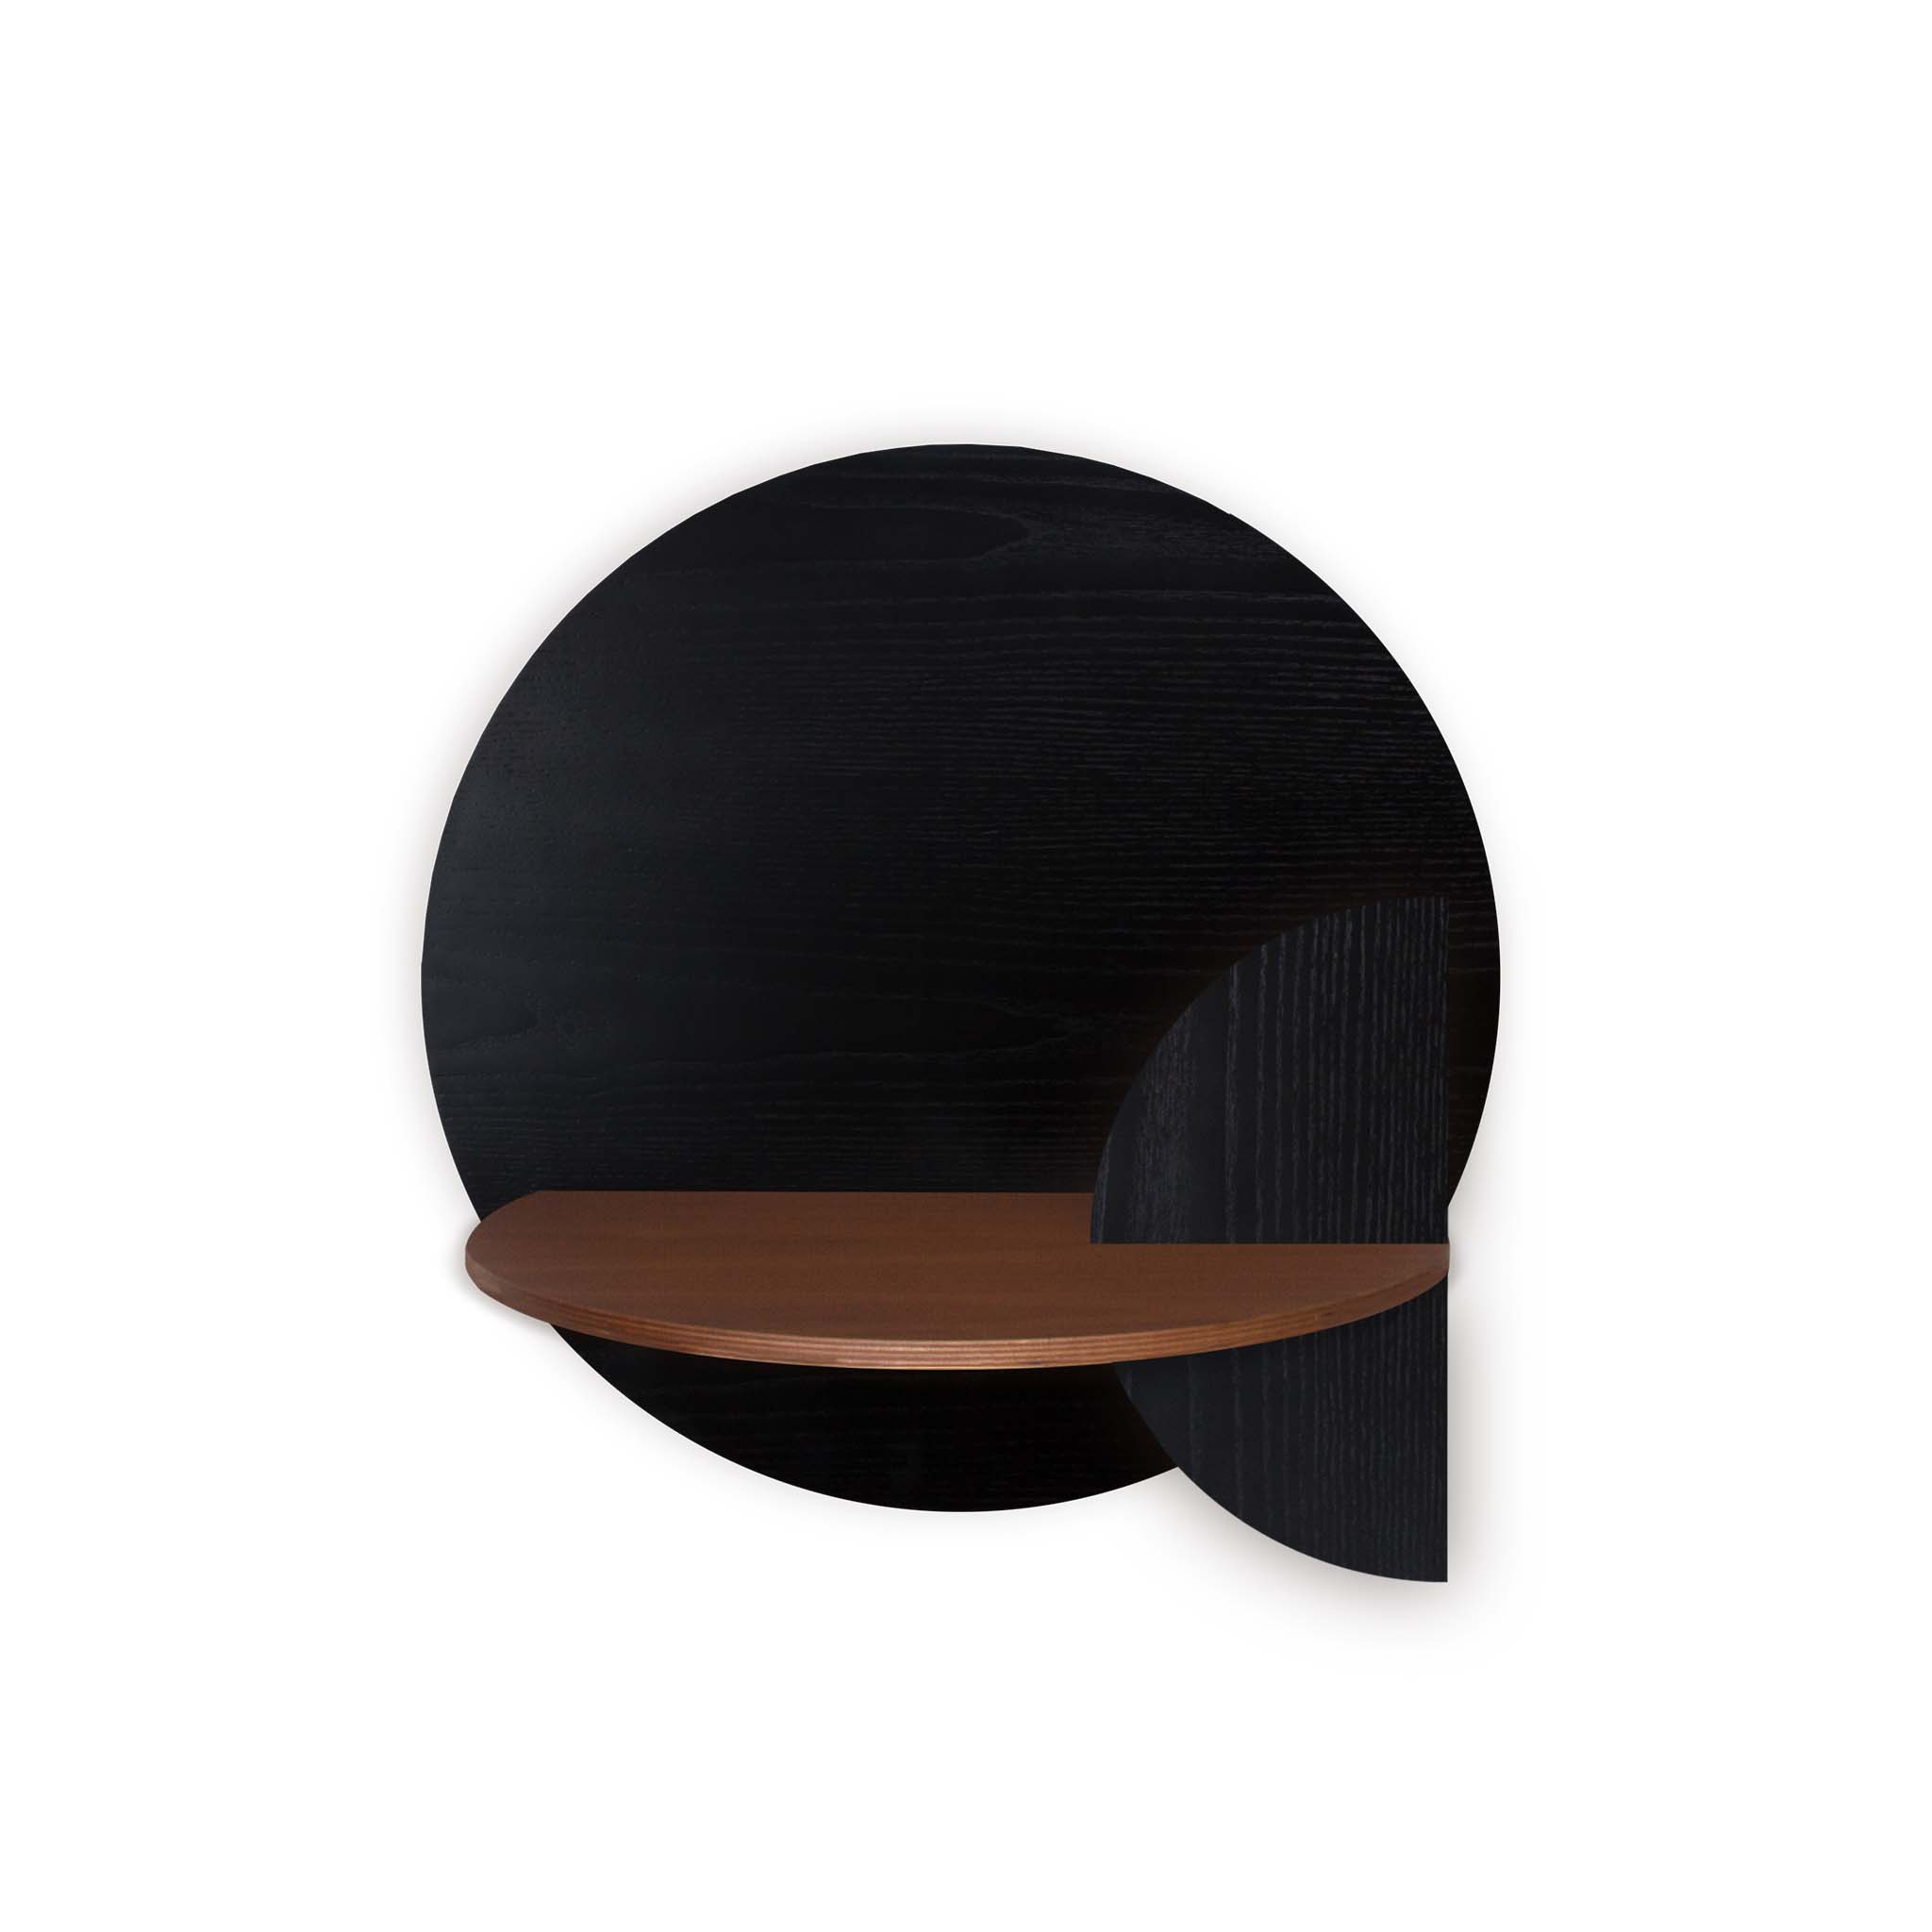 Alba floating nightstand · Black circle